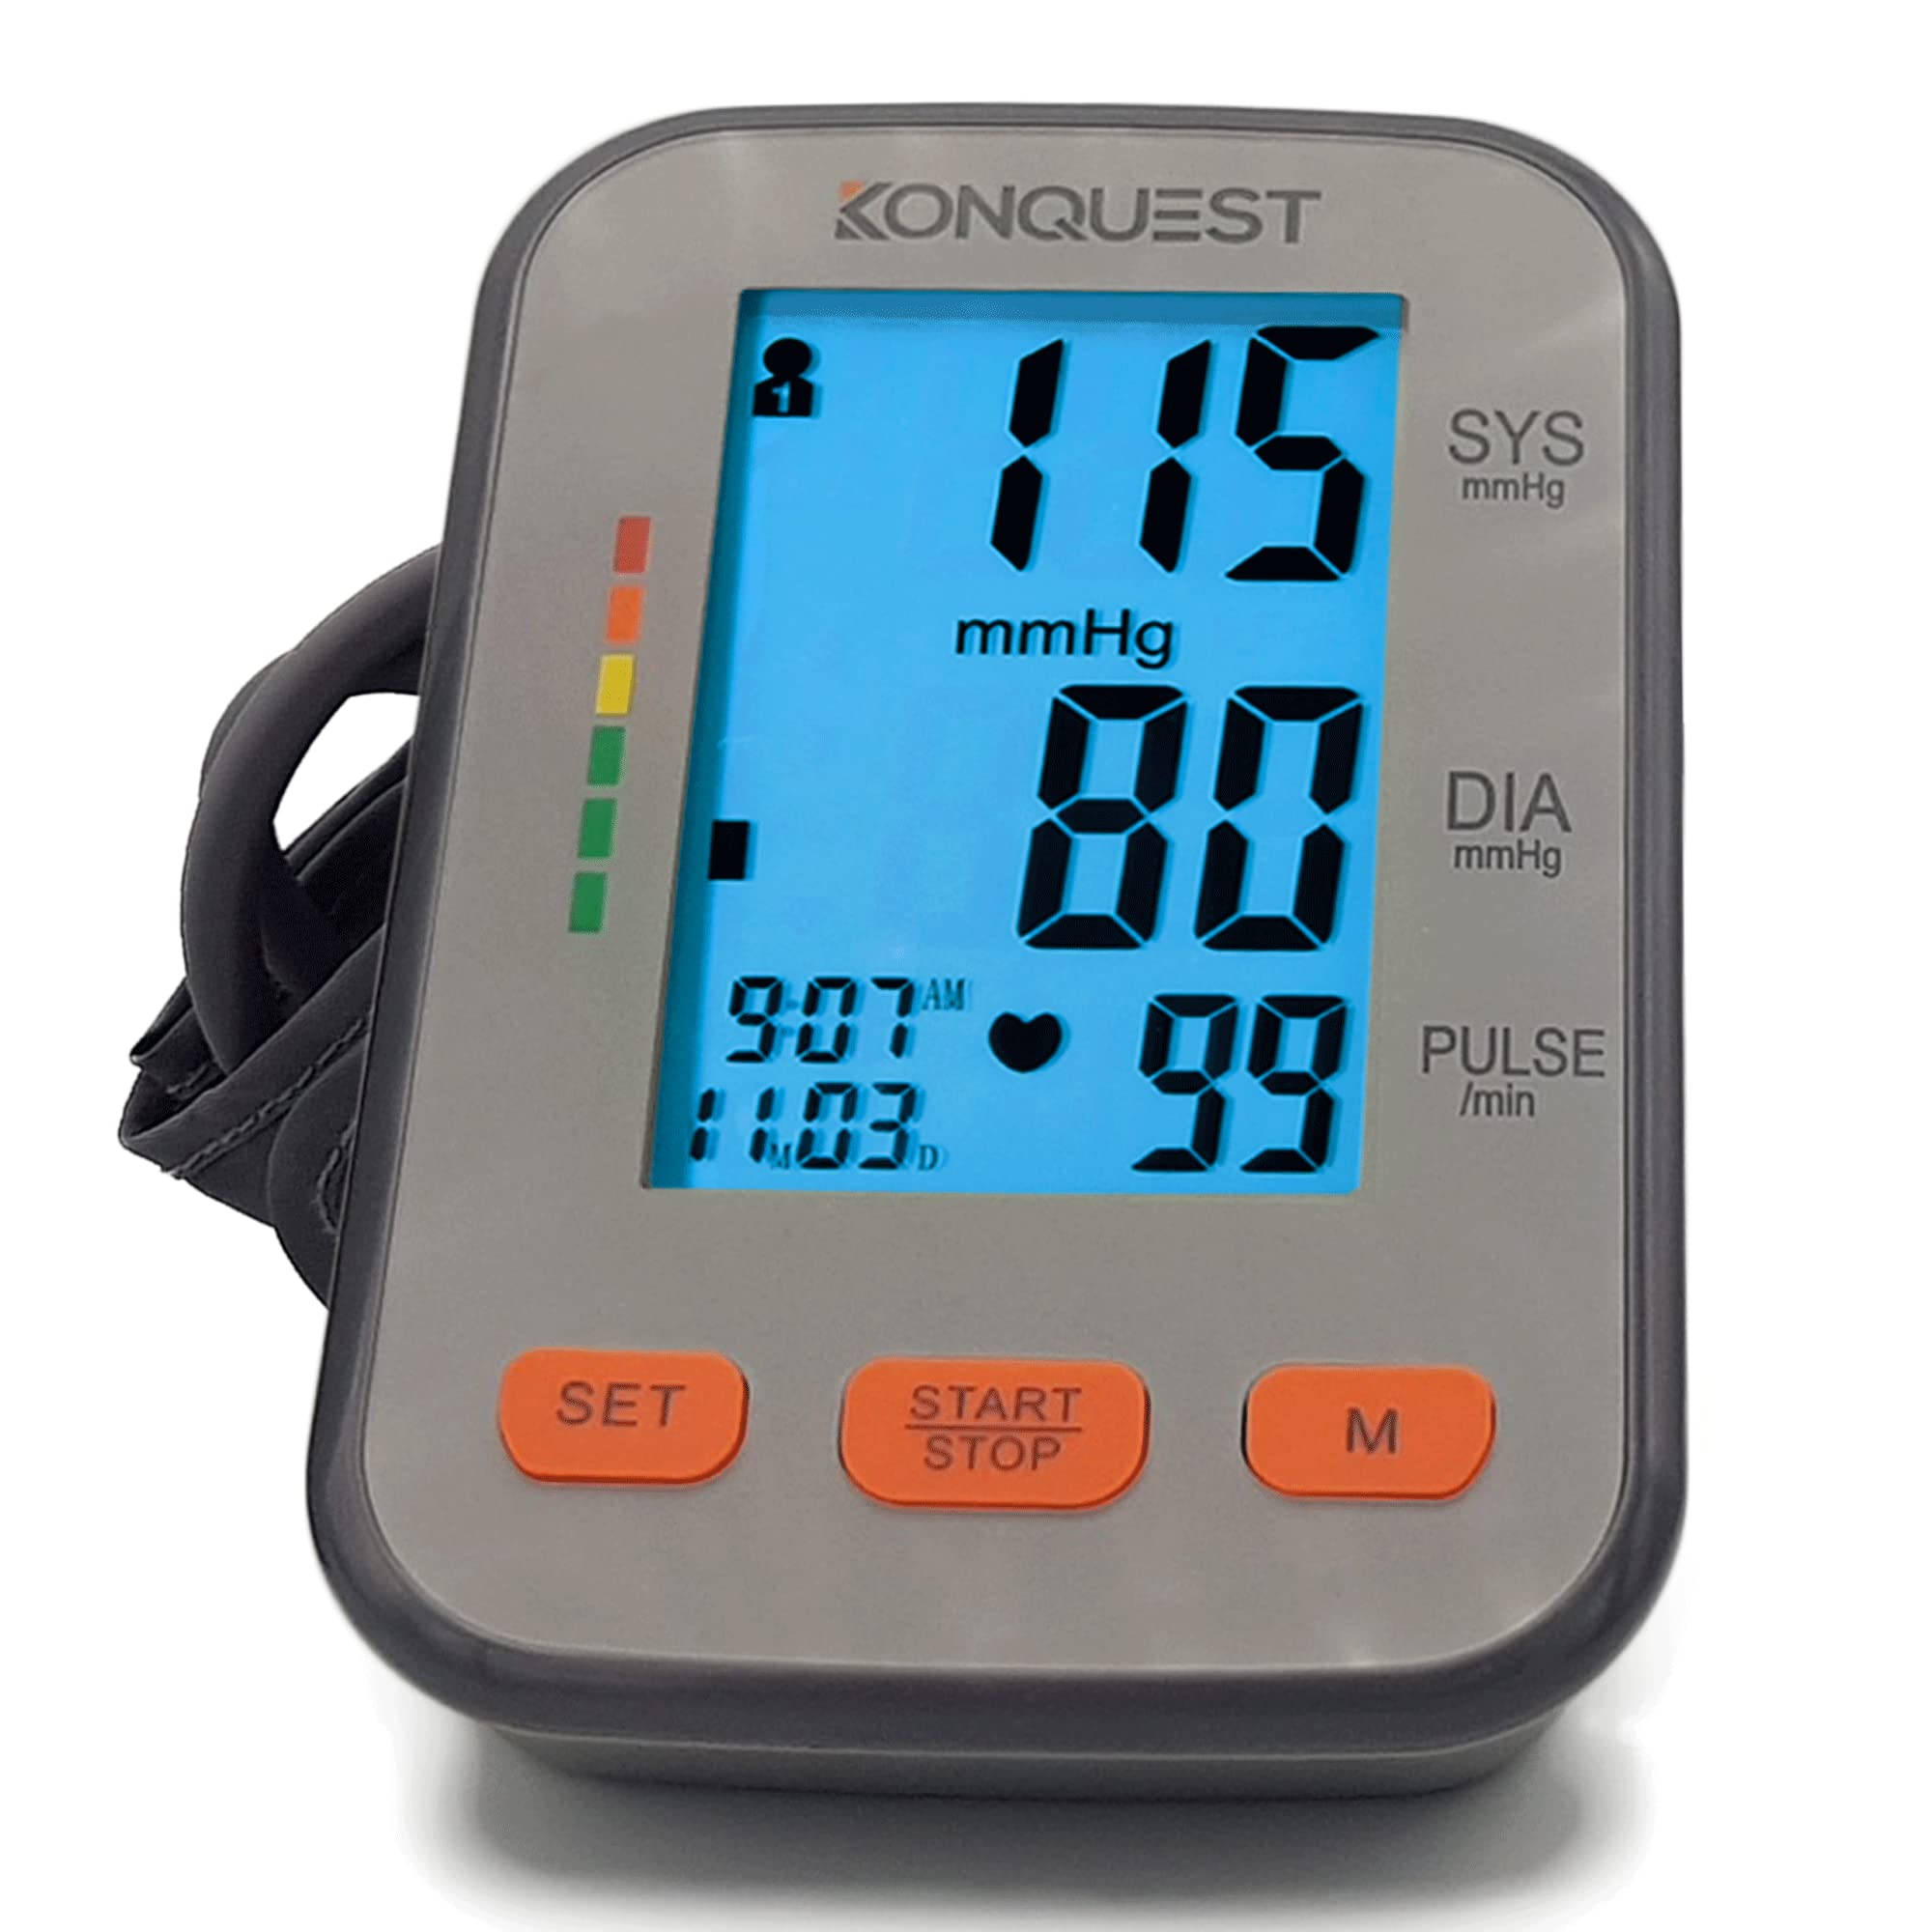 Konquest KBP-2704A Digital Blood Pressure Monitor